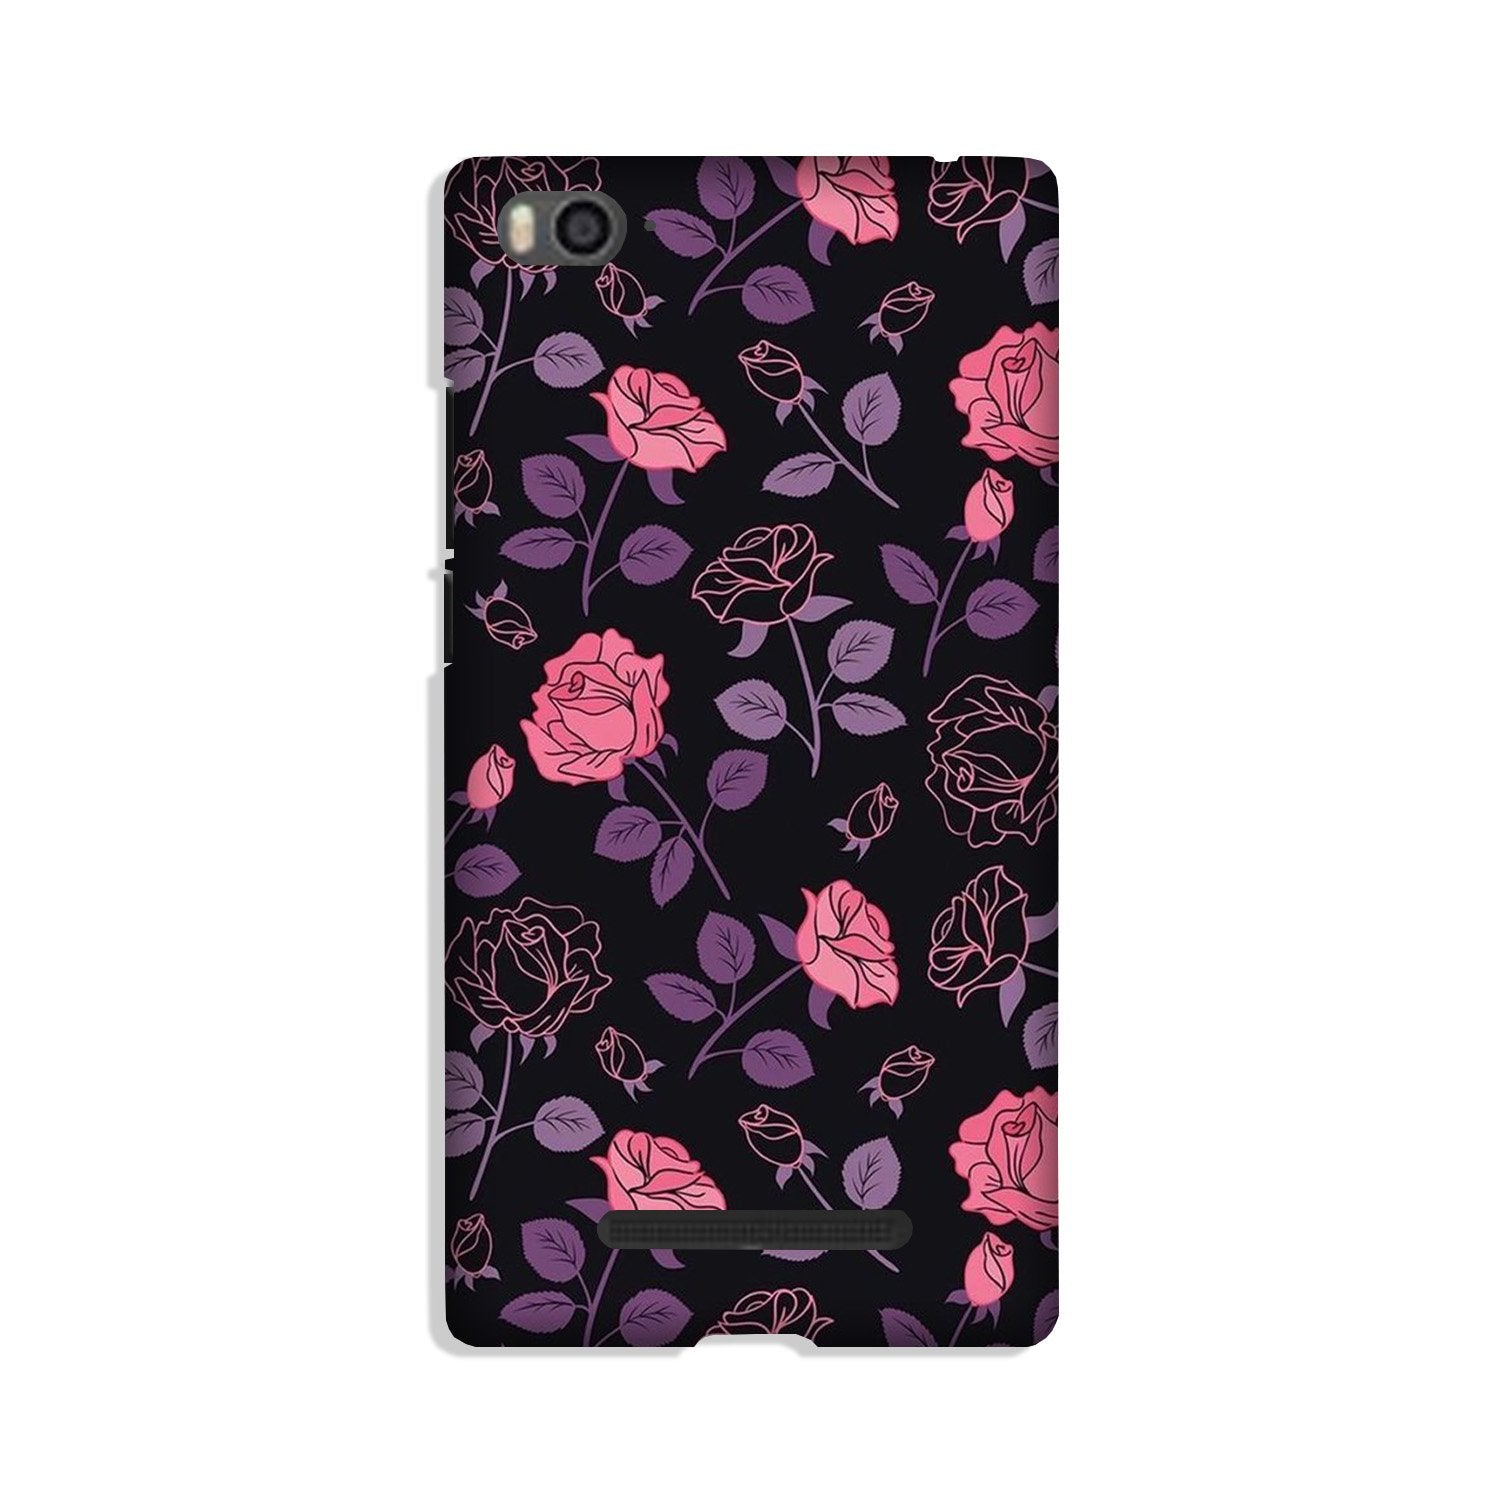 Rose Black Background Case for Xiaomi Mi 4i